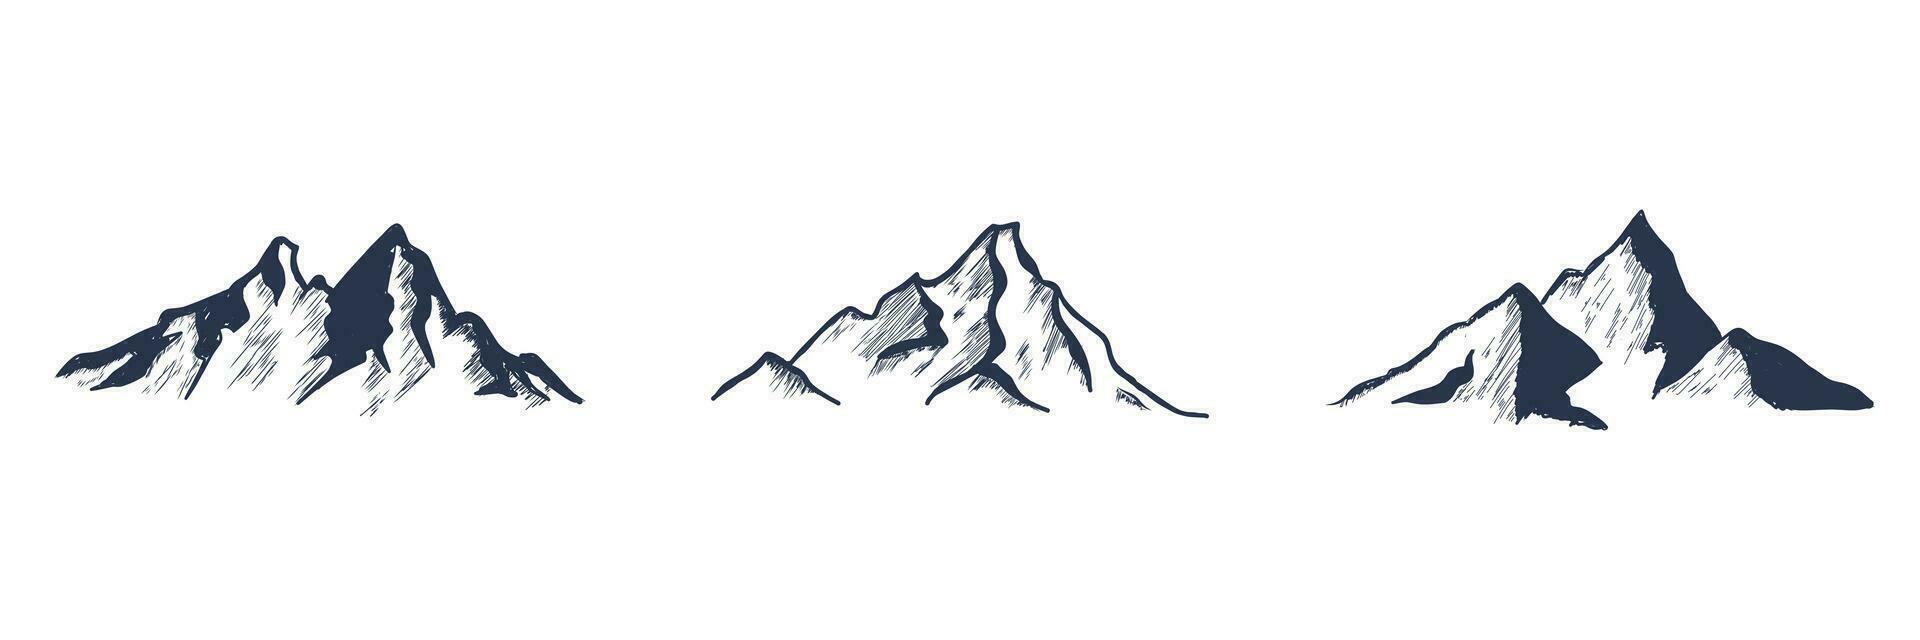 Mountains set. Hand drawn rocky peaks. Vector illustration.